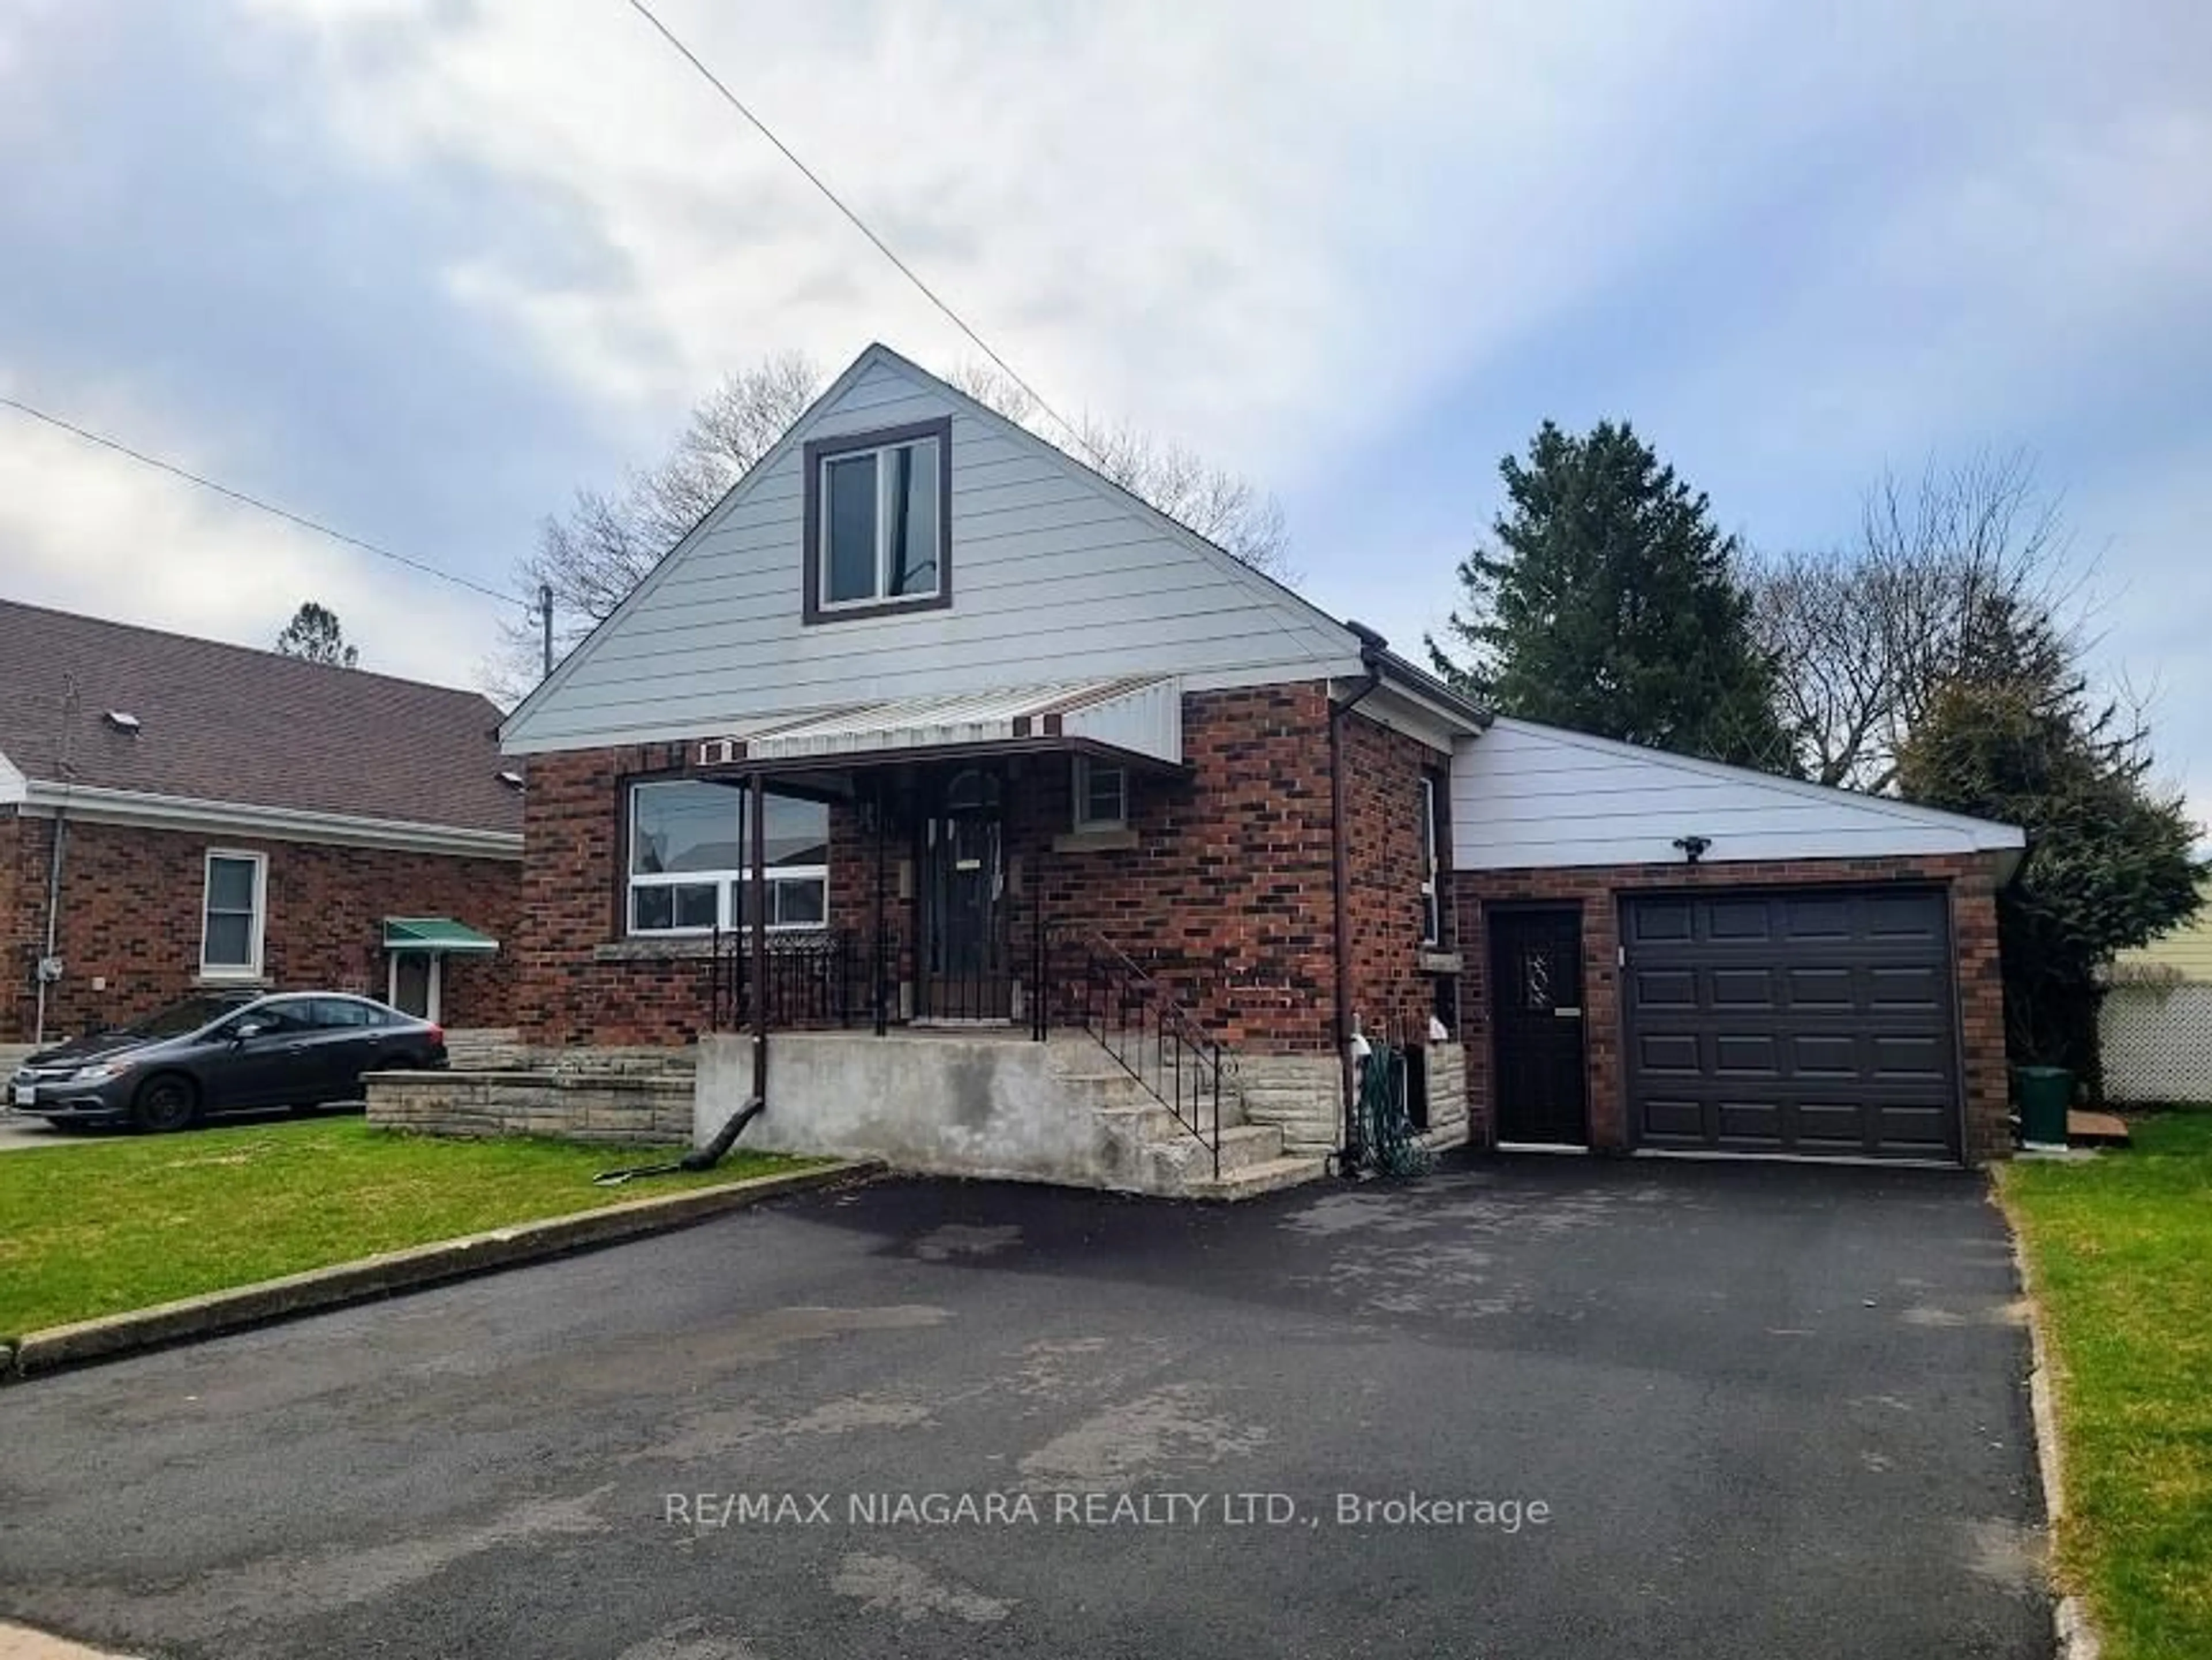 Frontside or backside of a home for 6476 Maranda St, Niagara Falls Ontario L2G 1Z7